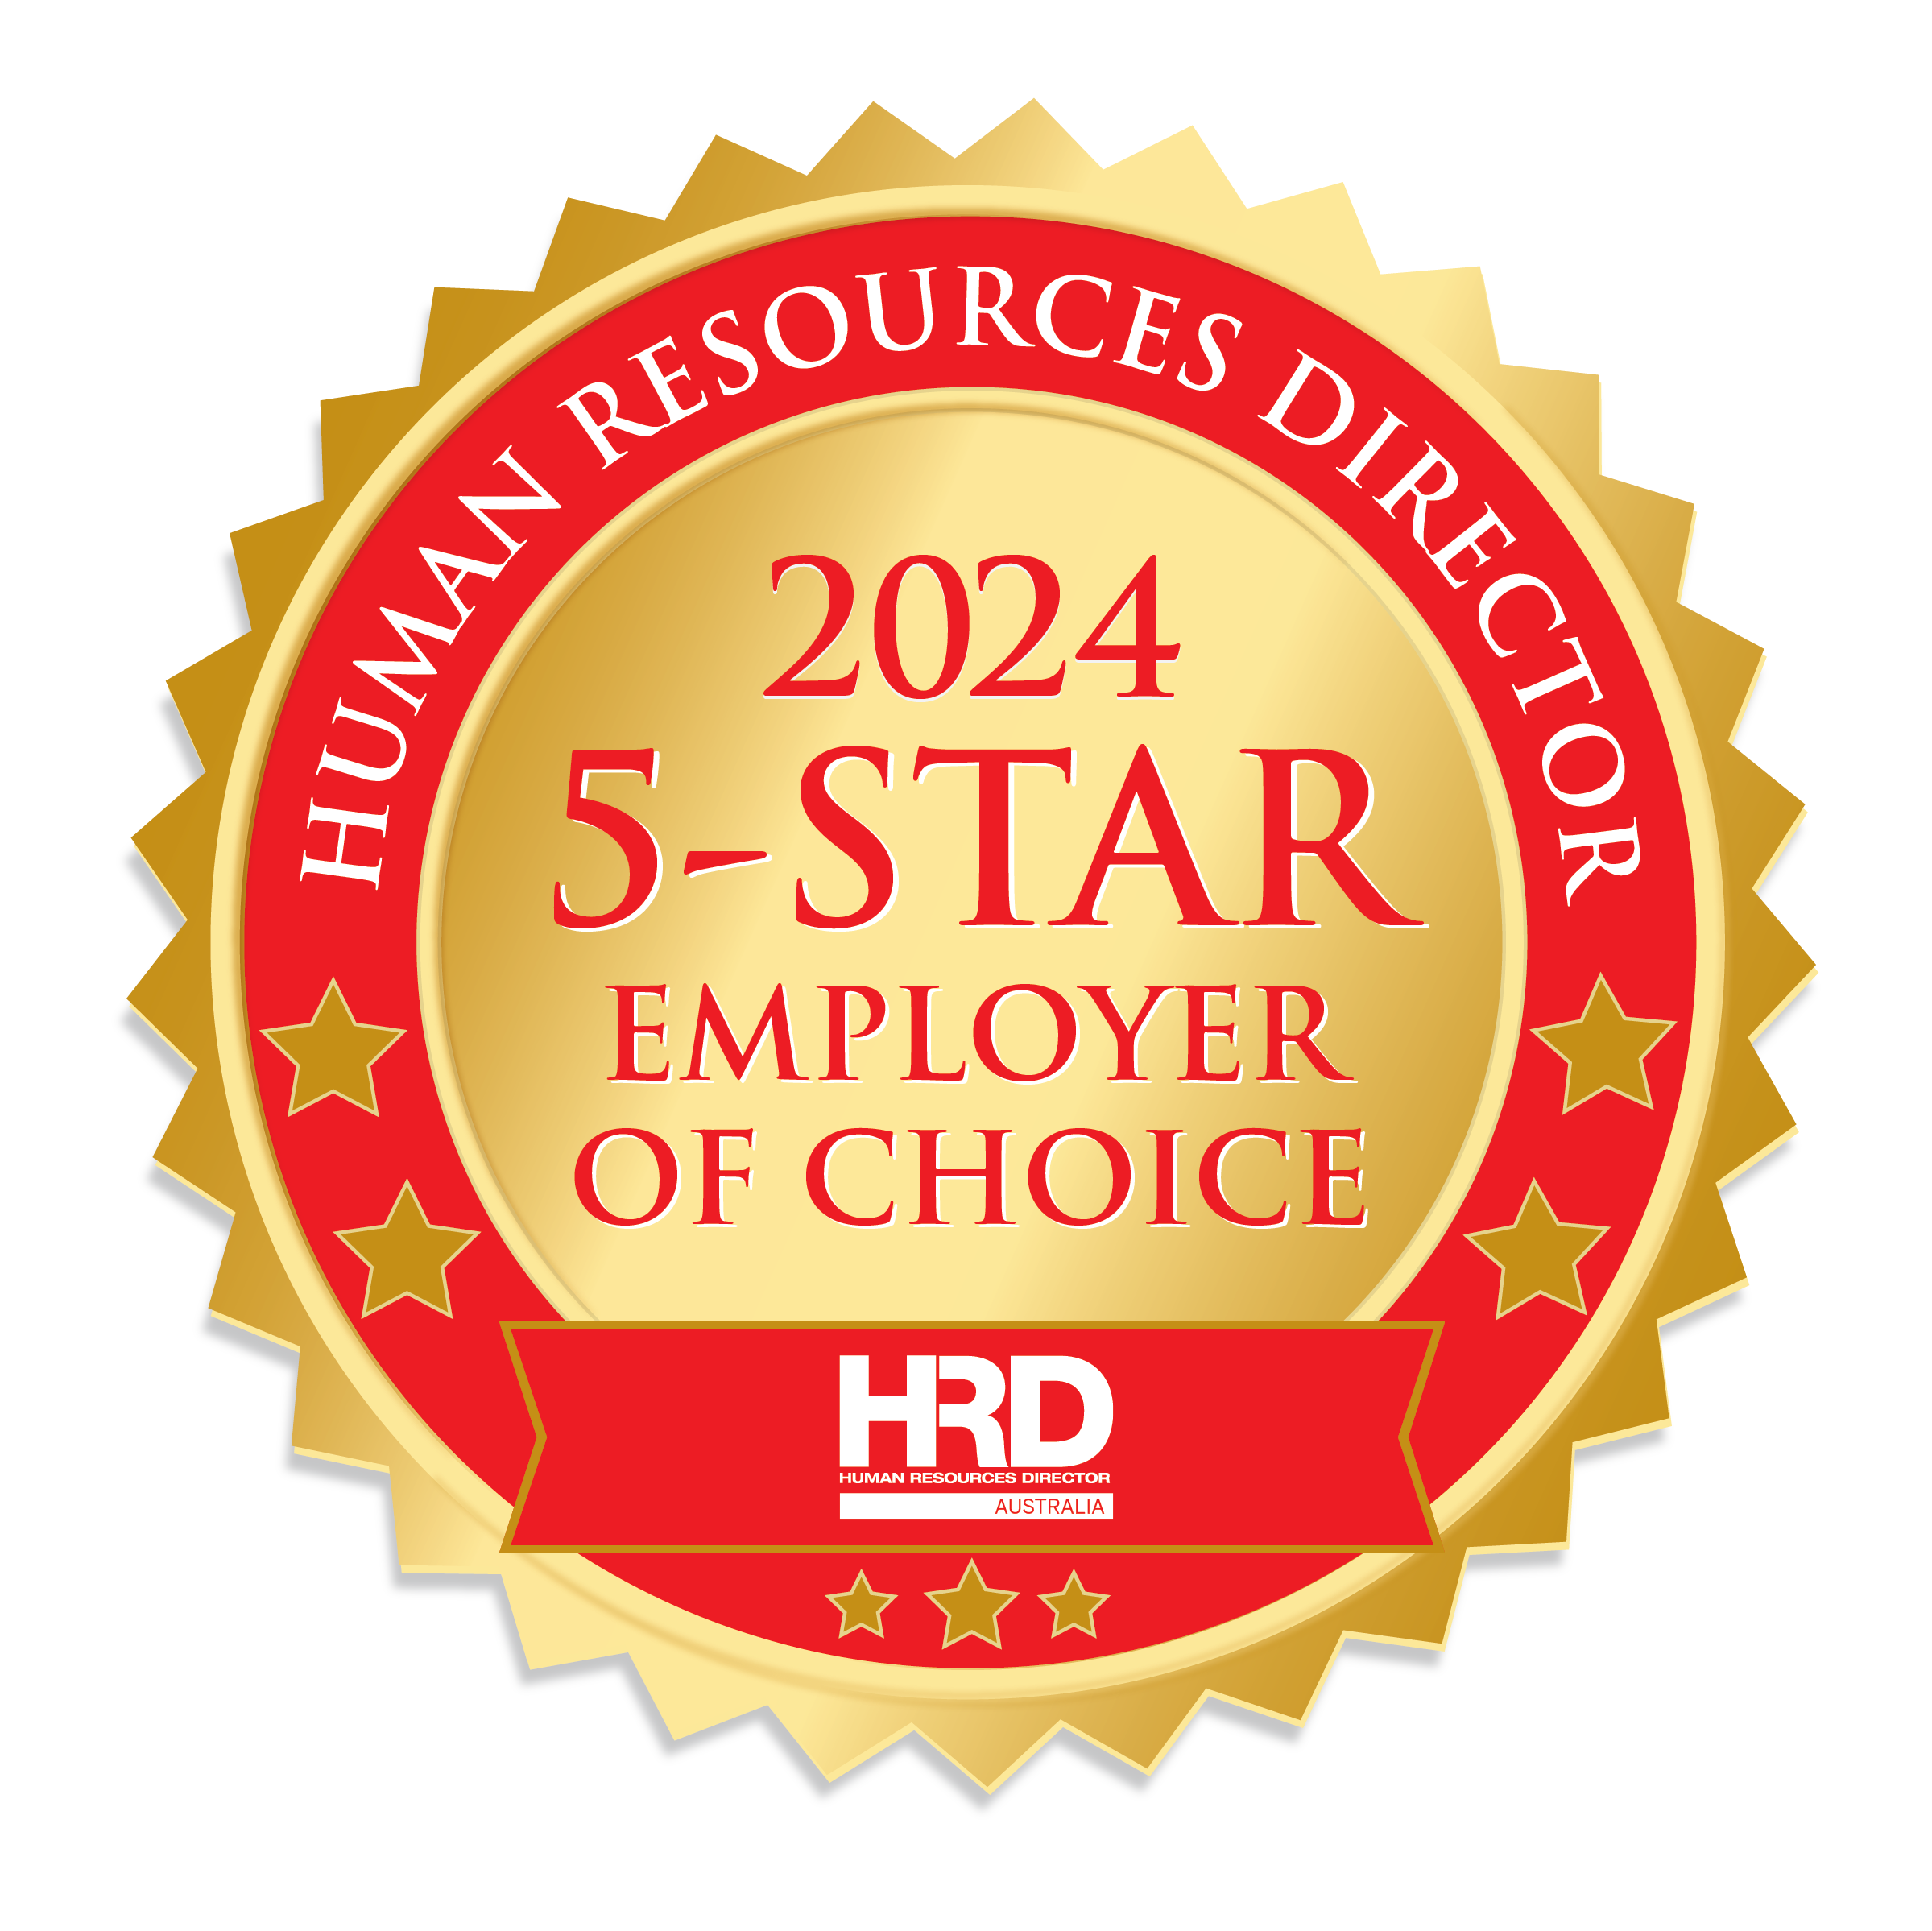 Hrd 5 Star Employer Of Choice 2024